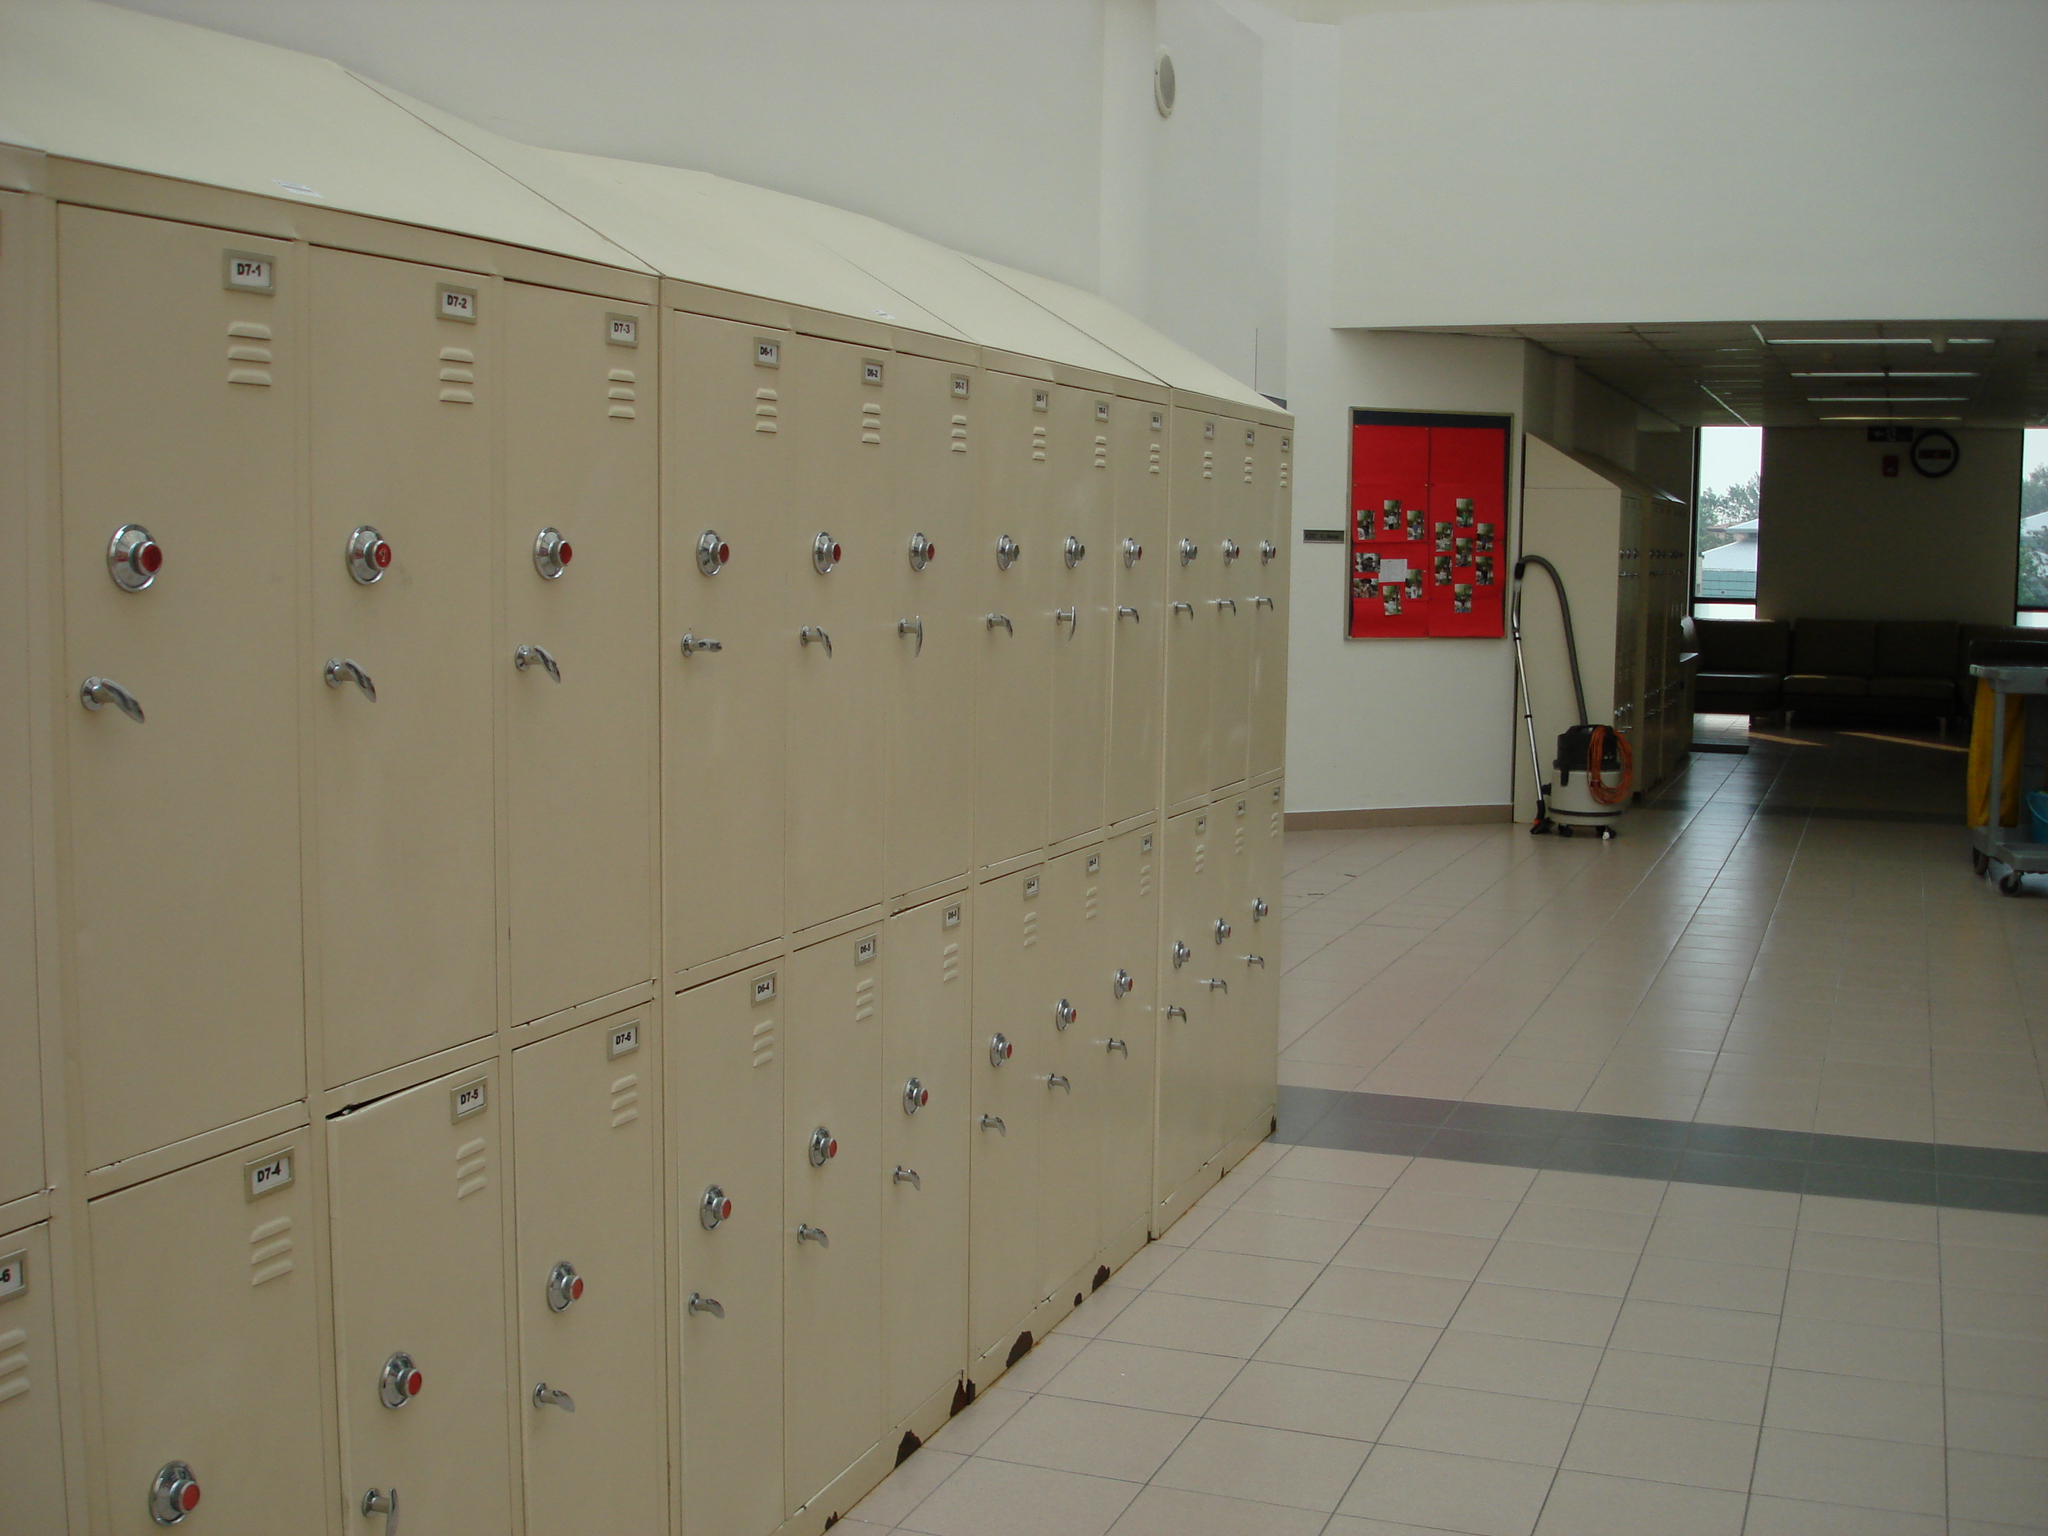 many beige lockers with keys and locks on them in a hallway